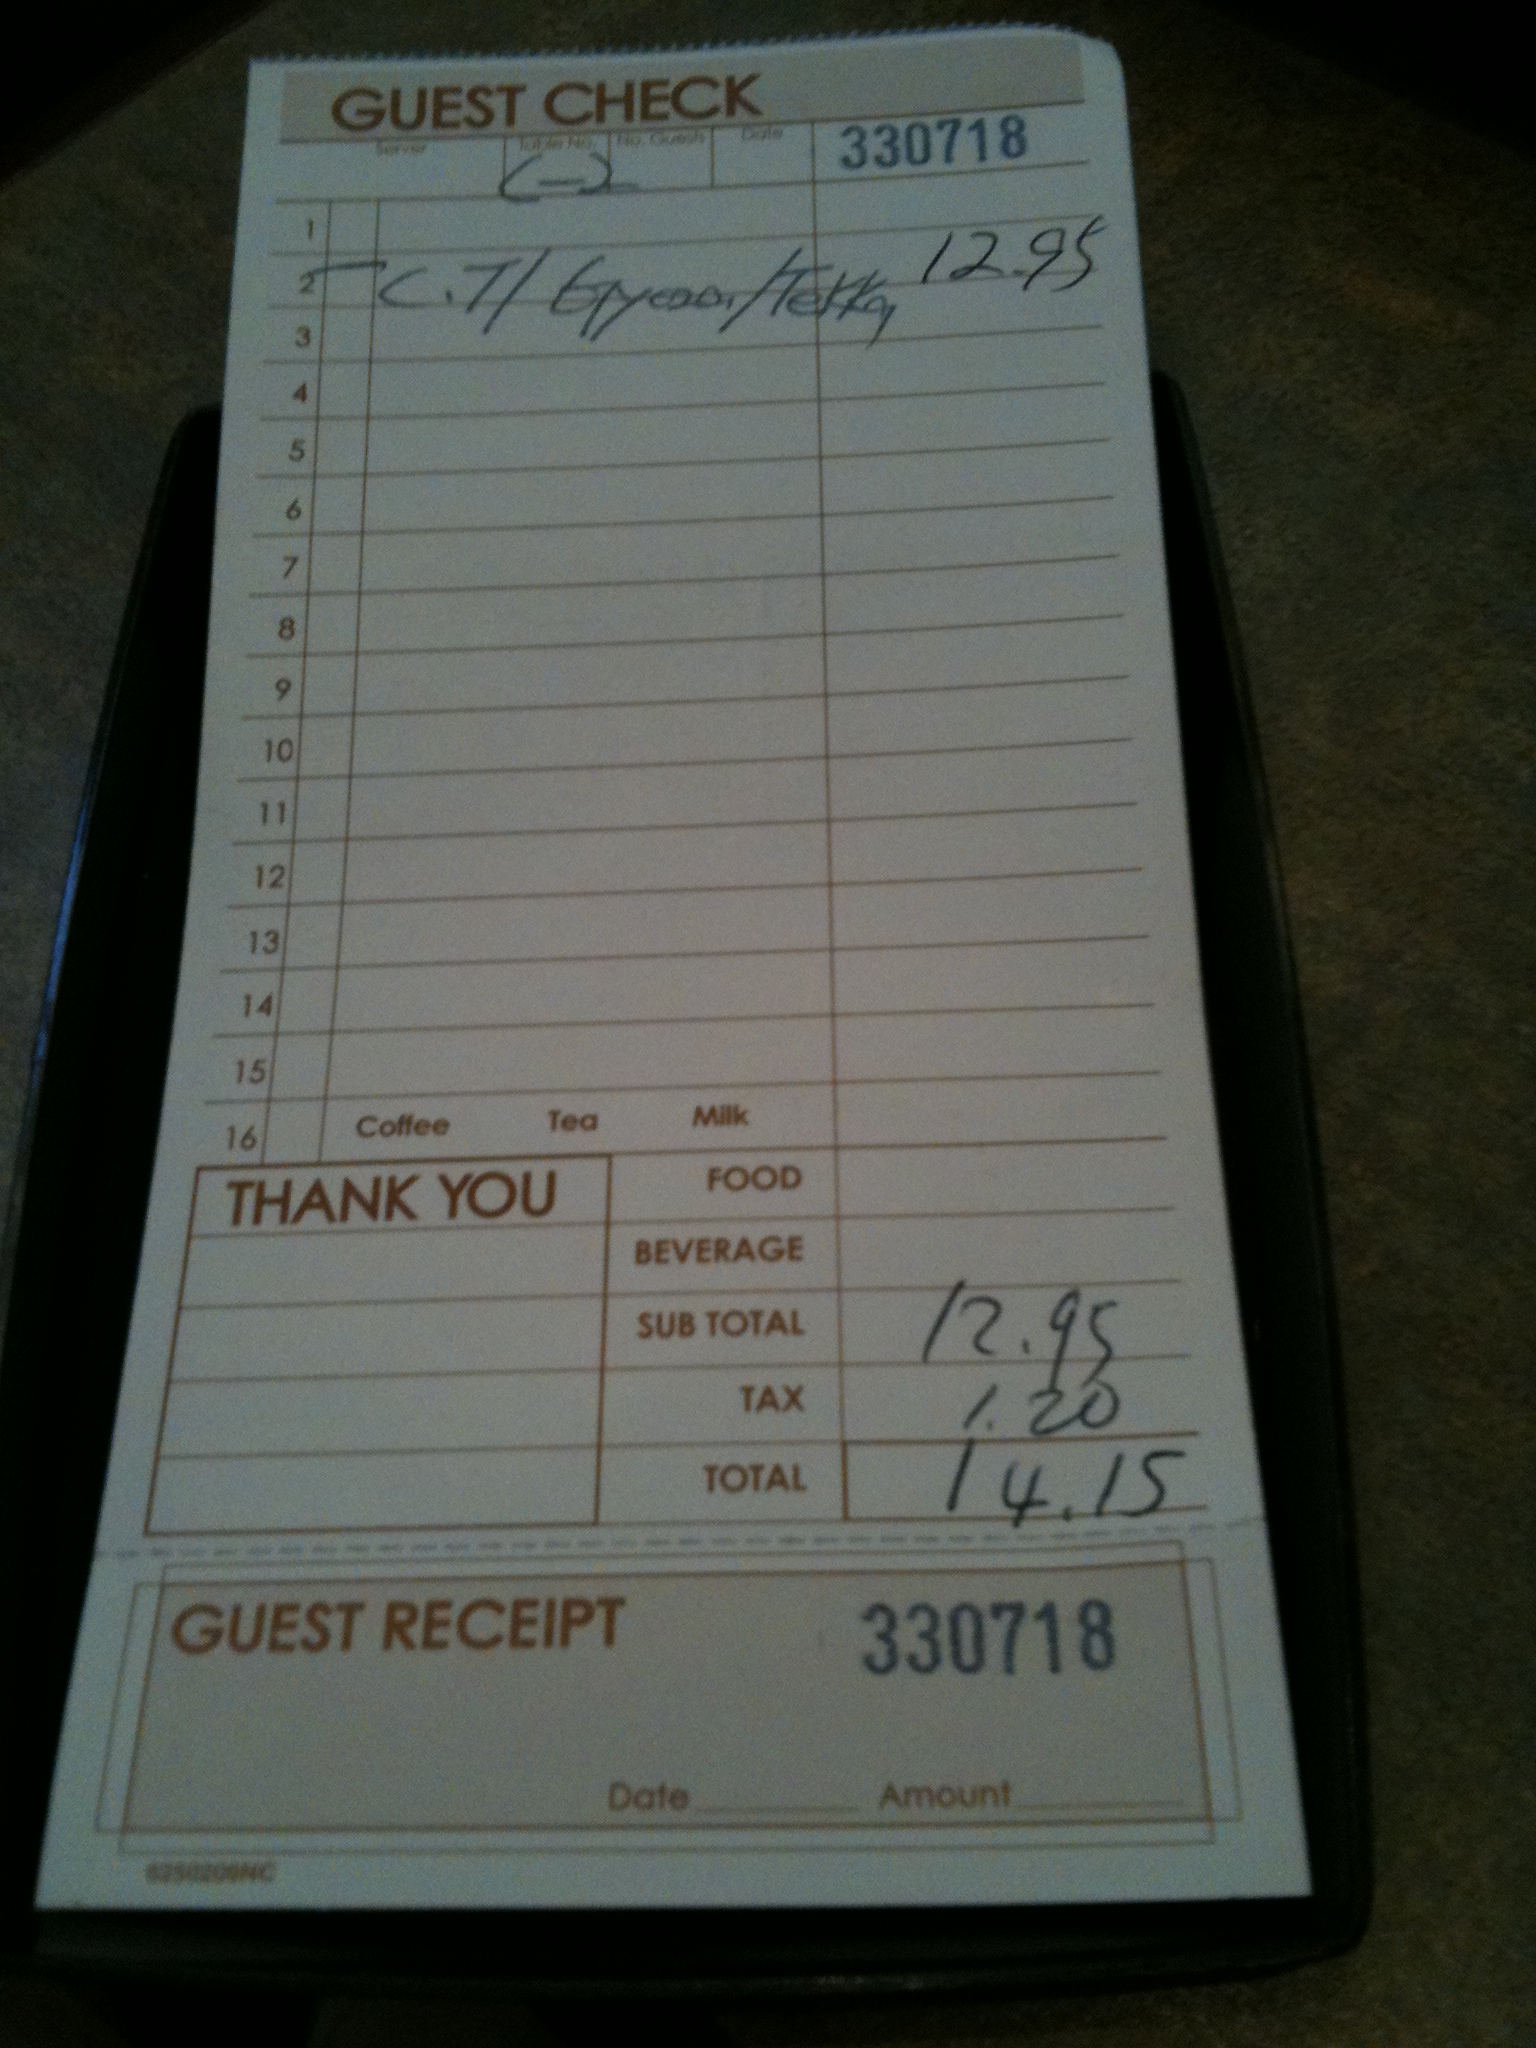 The bill was tiny!